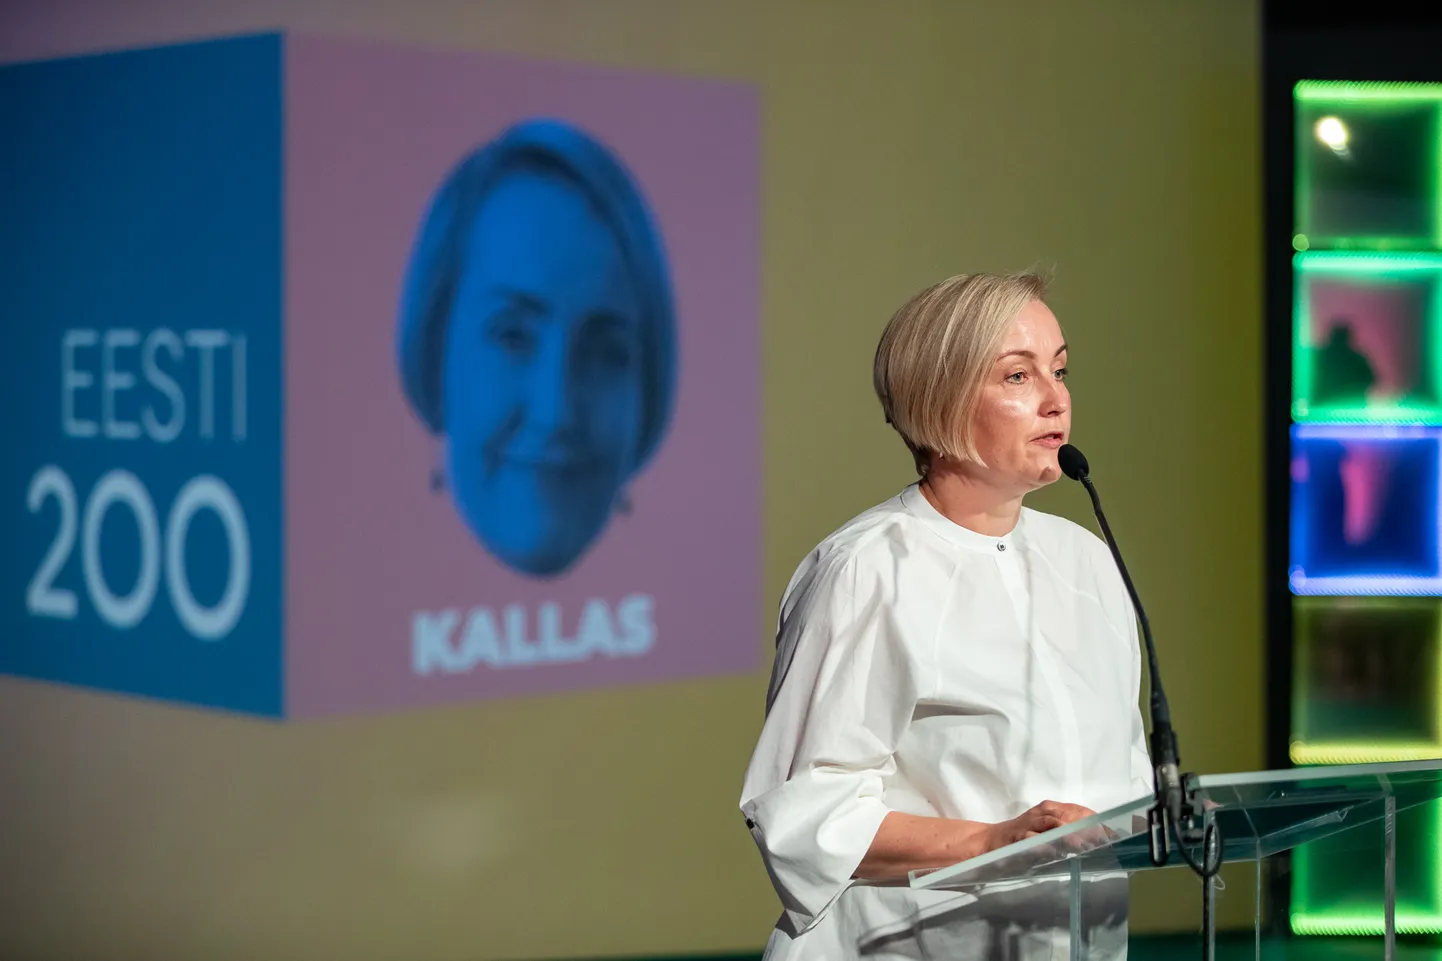 Eesti 200 esinaine Kristina Kallas.